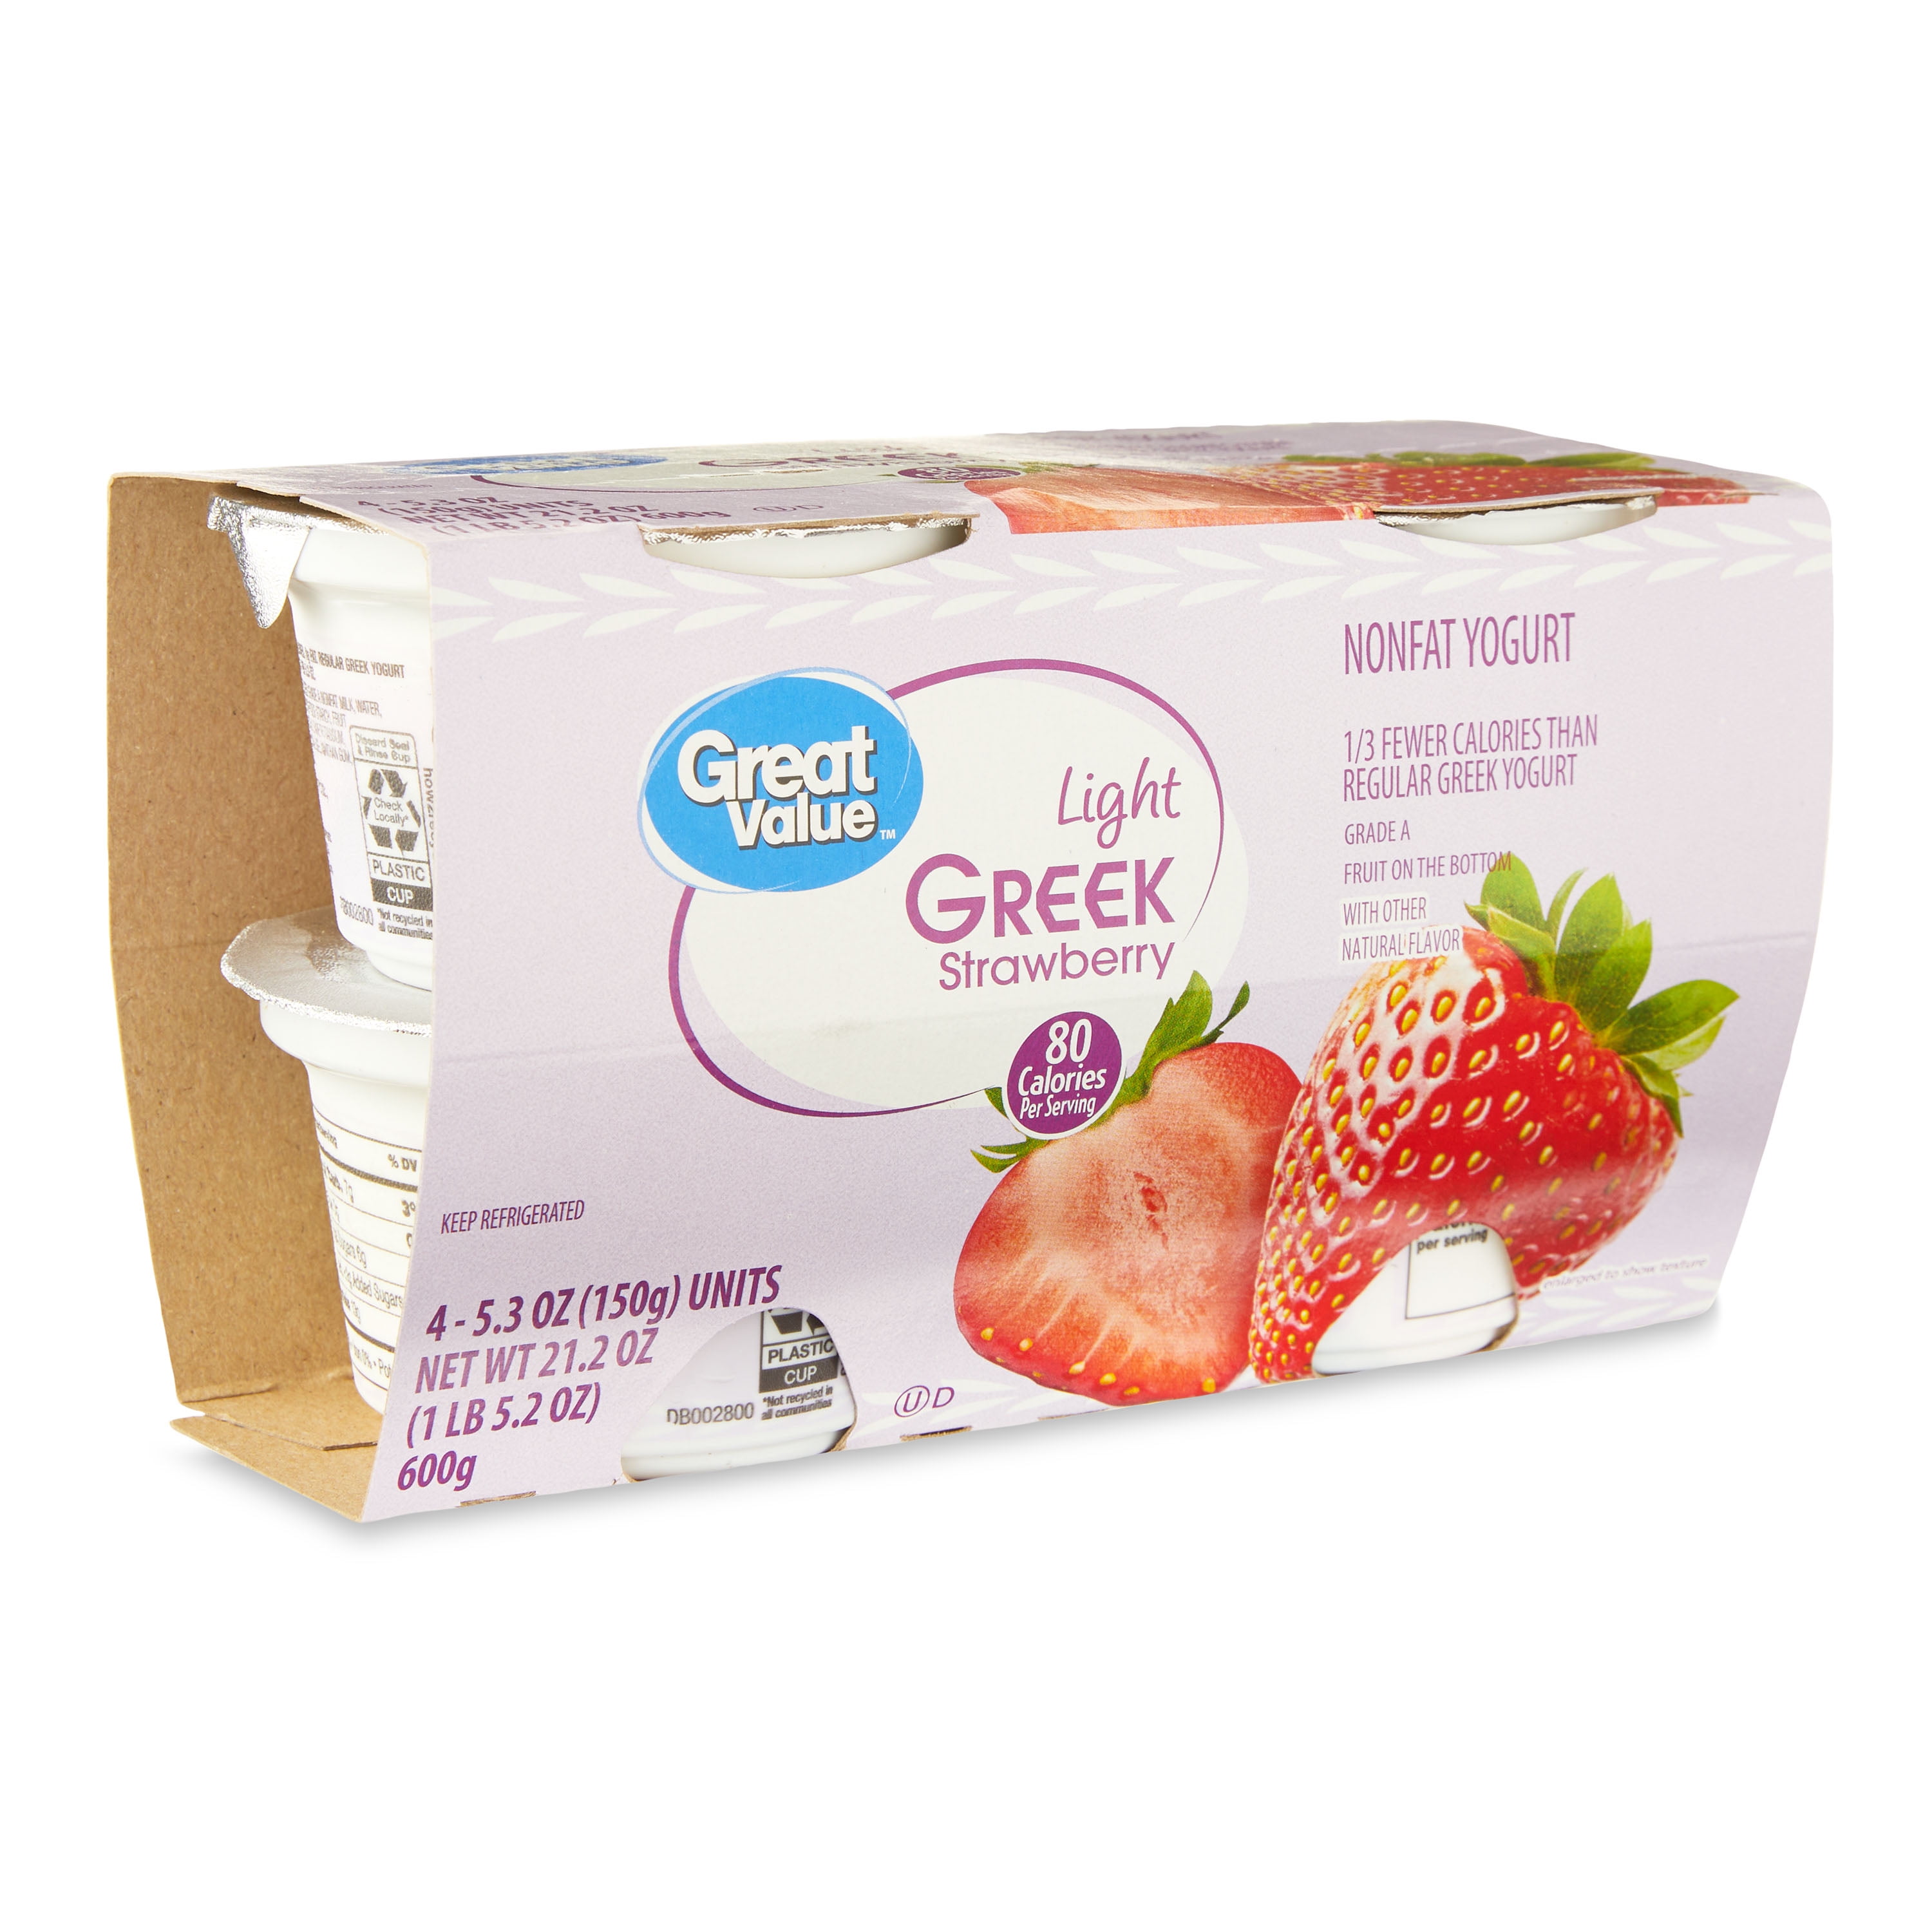 Light Greek Strawberry Nonfat Yogurt